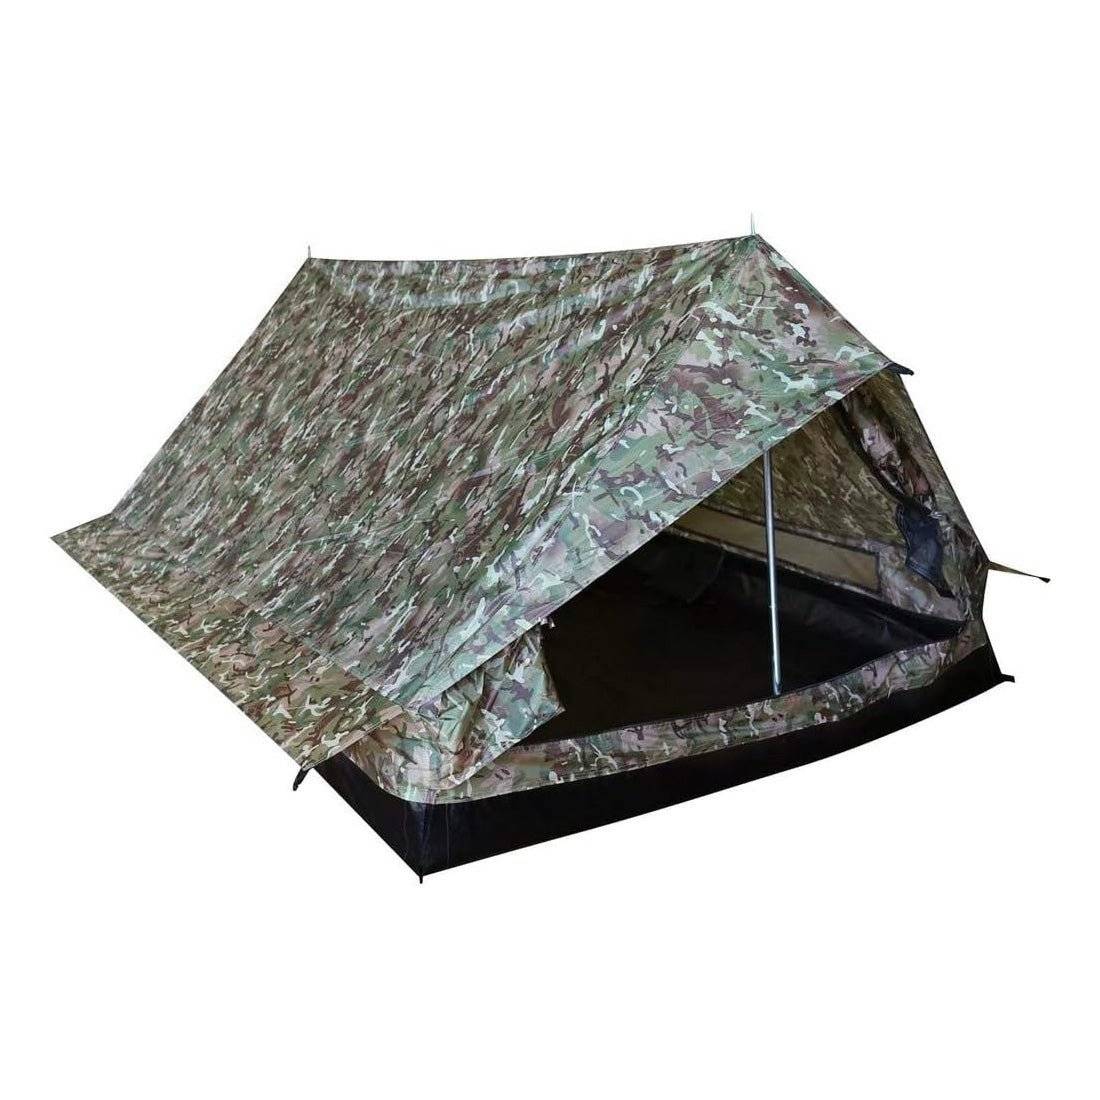 Kombat Trooper 2 Person Camping Tent BTP - John Bull Clothing